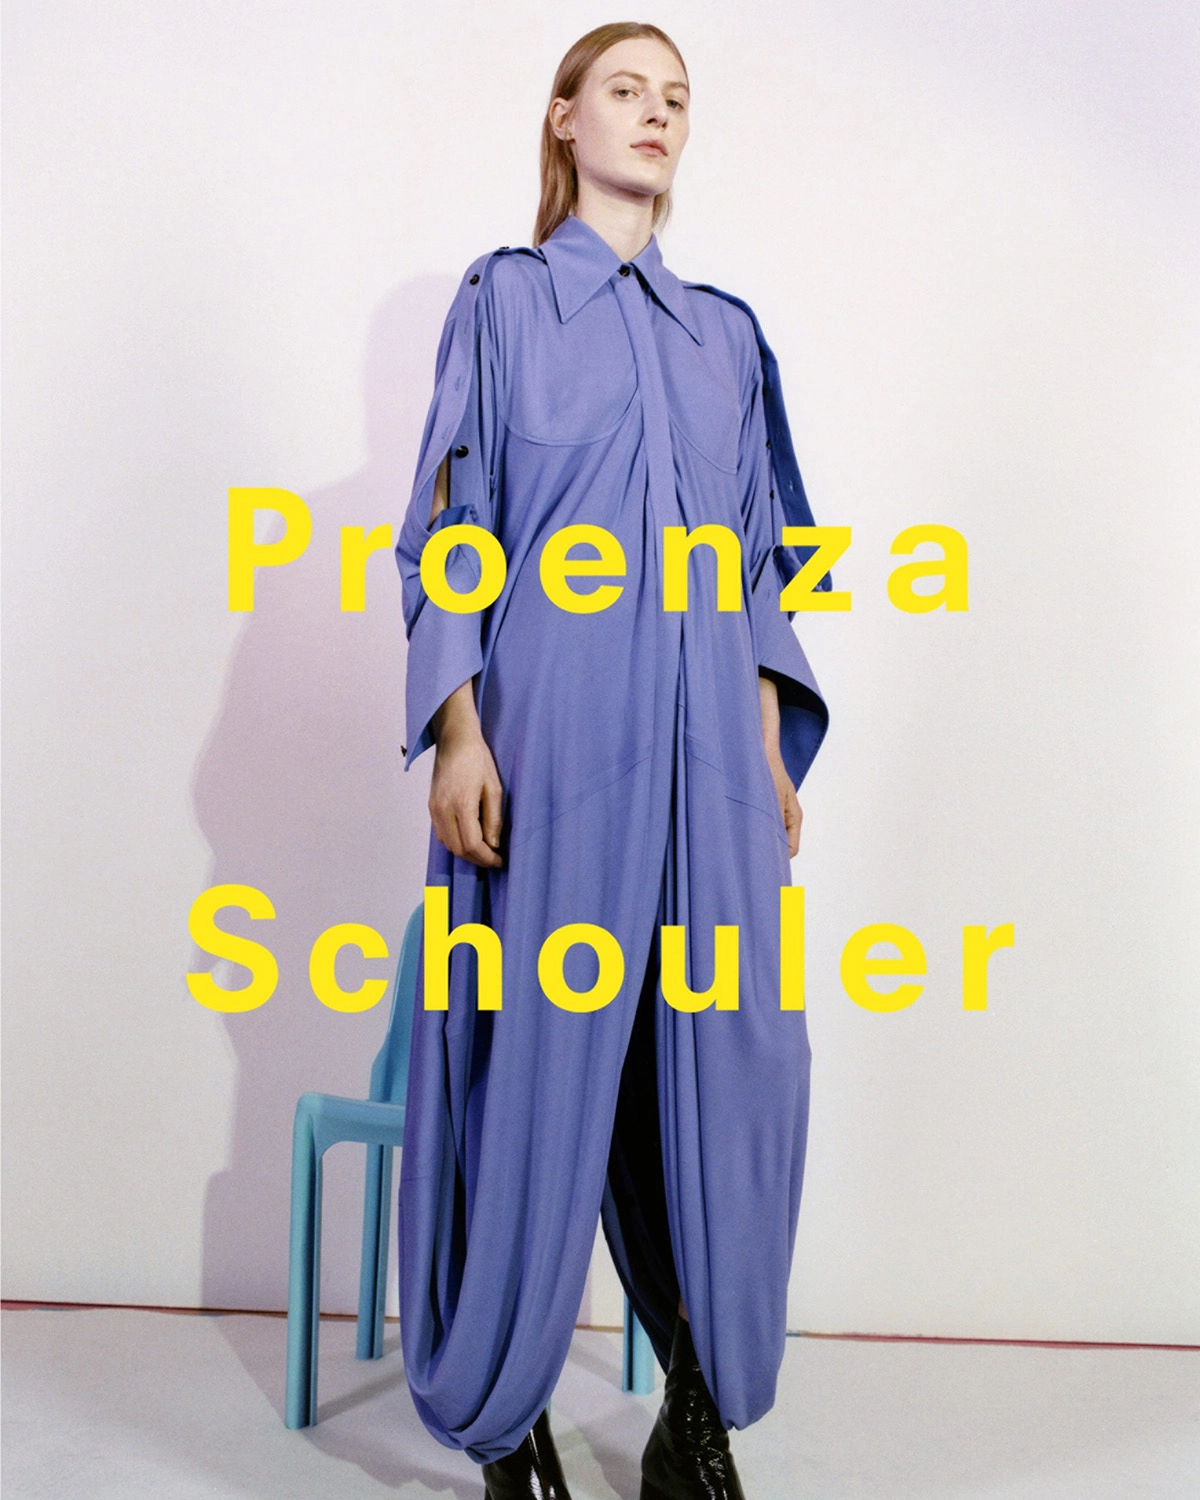 Proenza Schouler Fall Winter 2022 Campaign